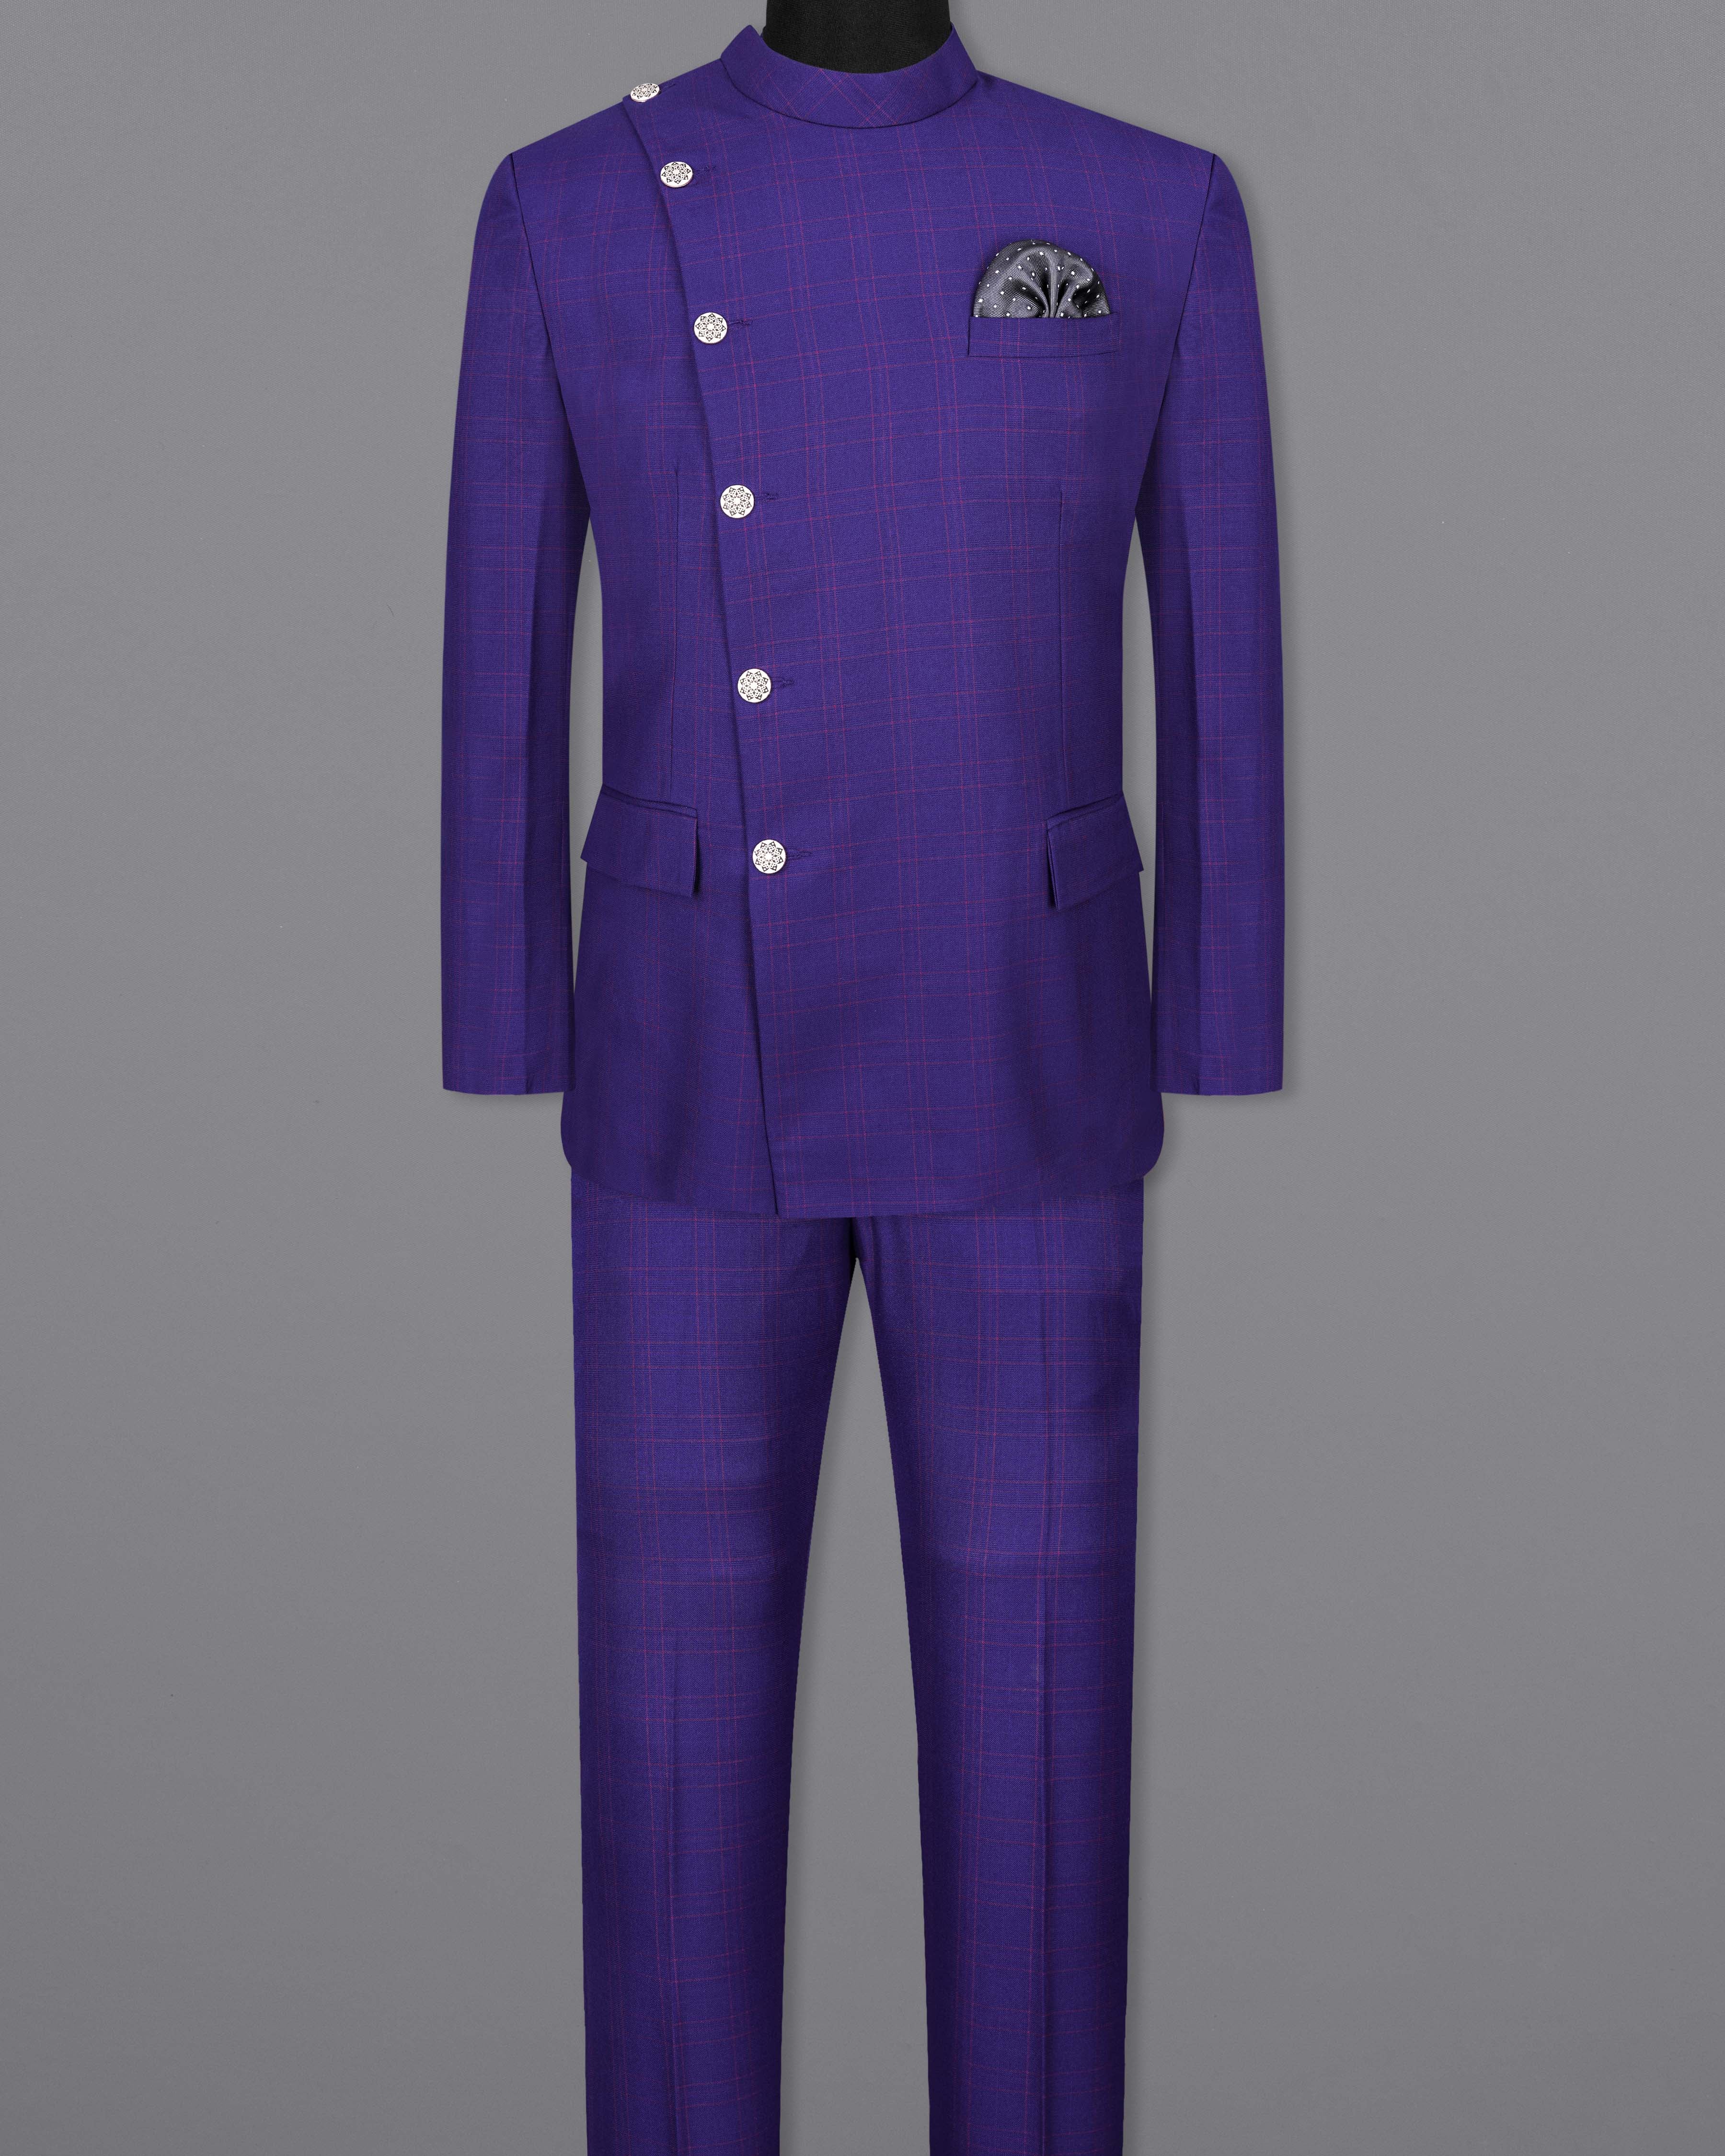 Christalle Blue with Fuchsia Pink Windoepane Cross Placket Bandhgala Suit